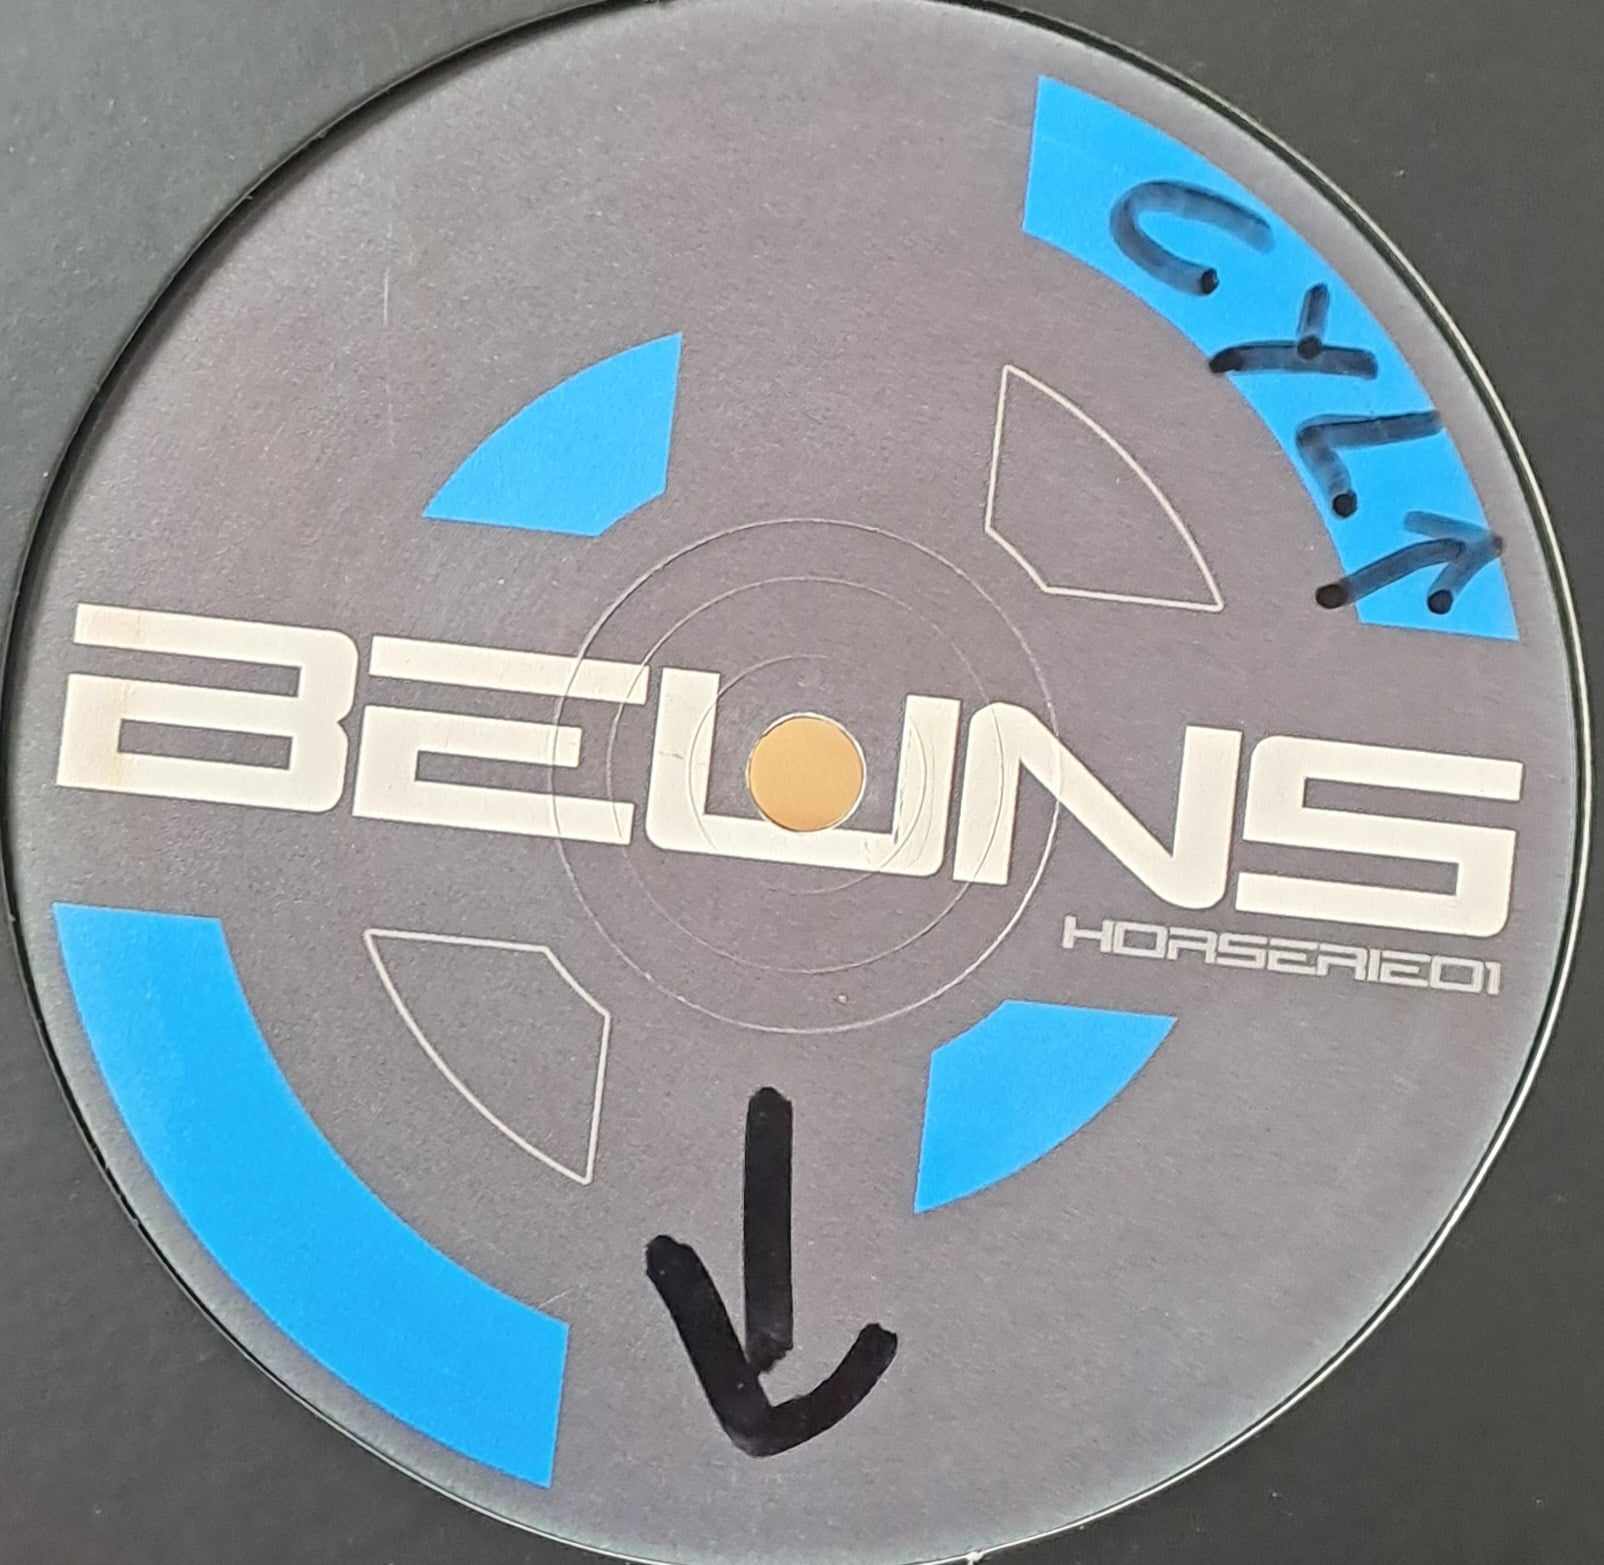 Beuns Horserie 01 - vinyle freetekno